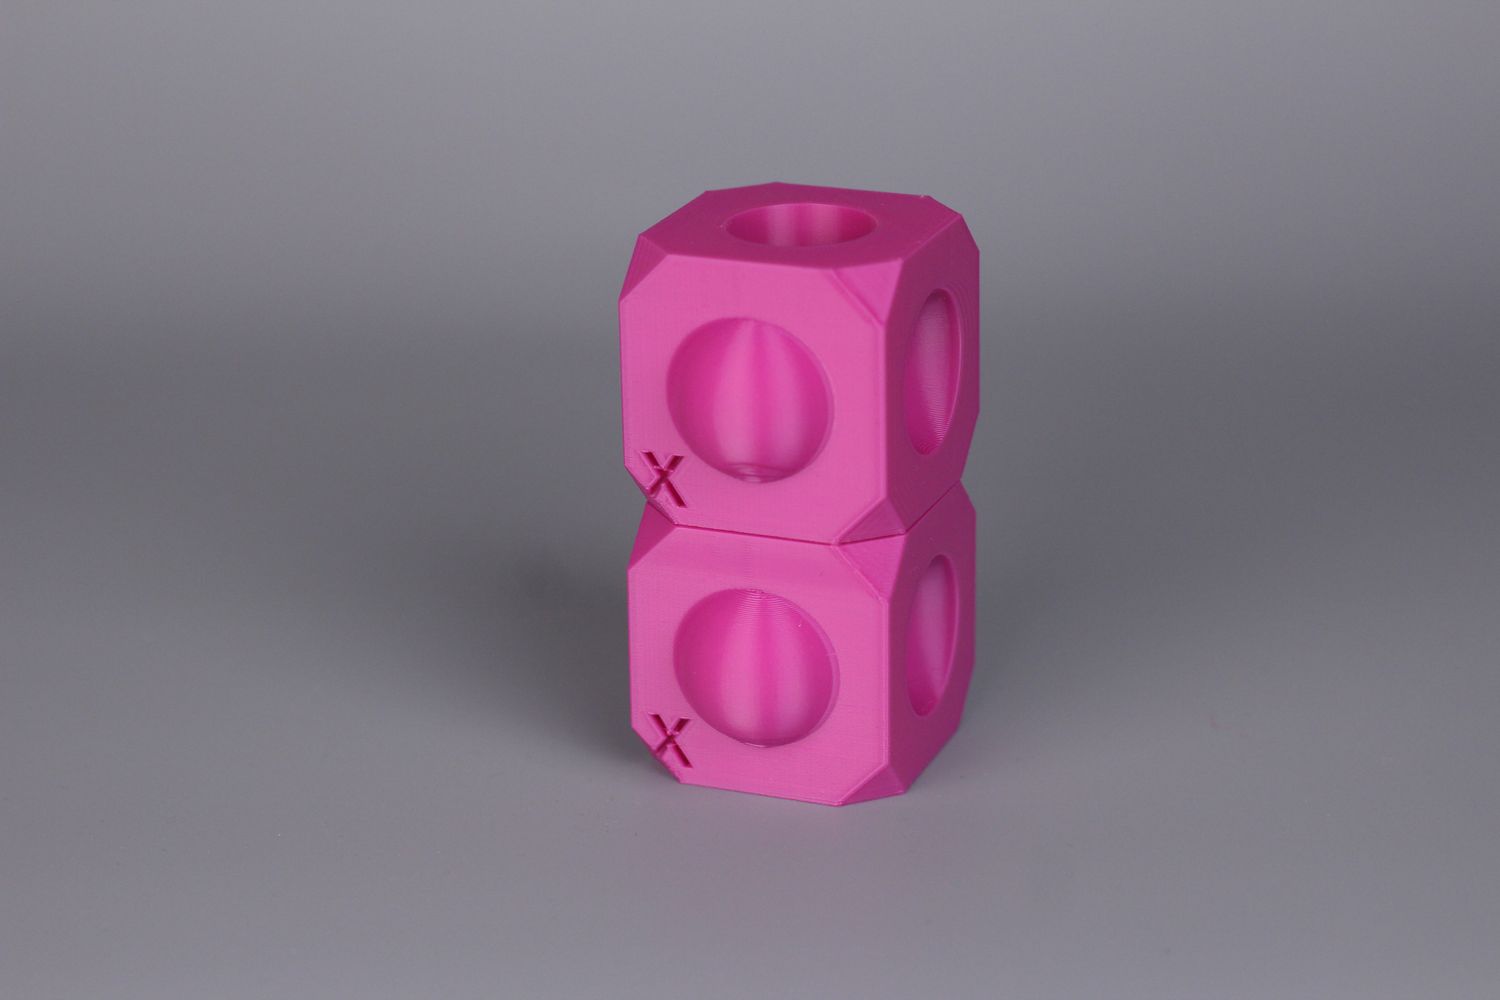 Zaribo Calibration Cube printed on BIQU Hurakan4 | BIQU Hurakan Review: Klipper Firmware on a Budget